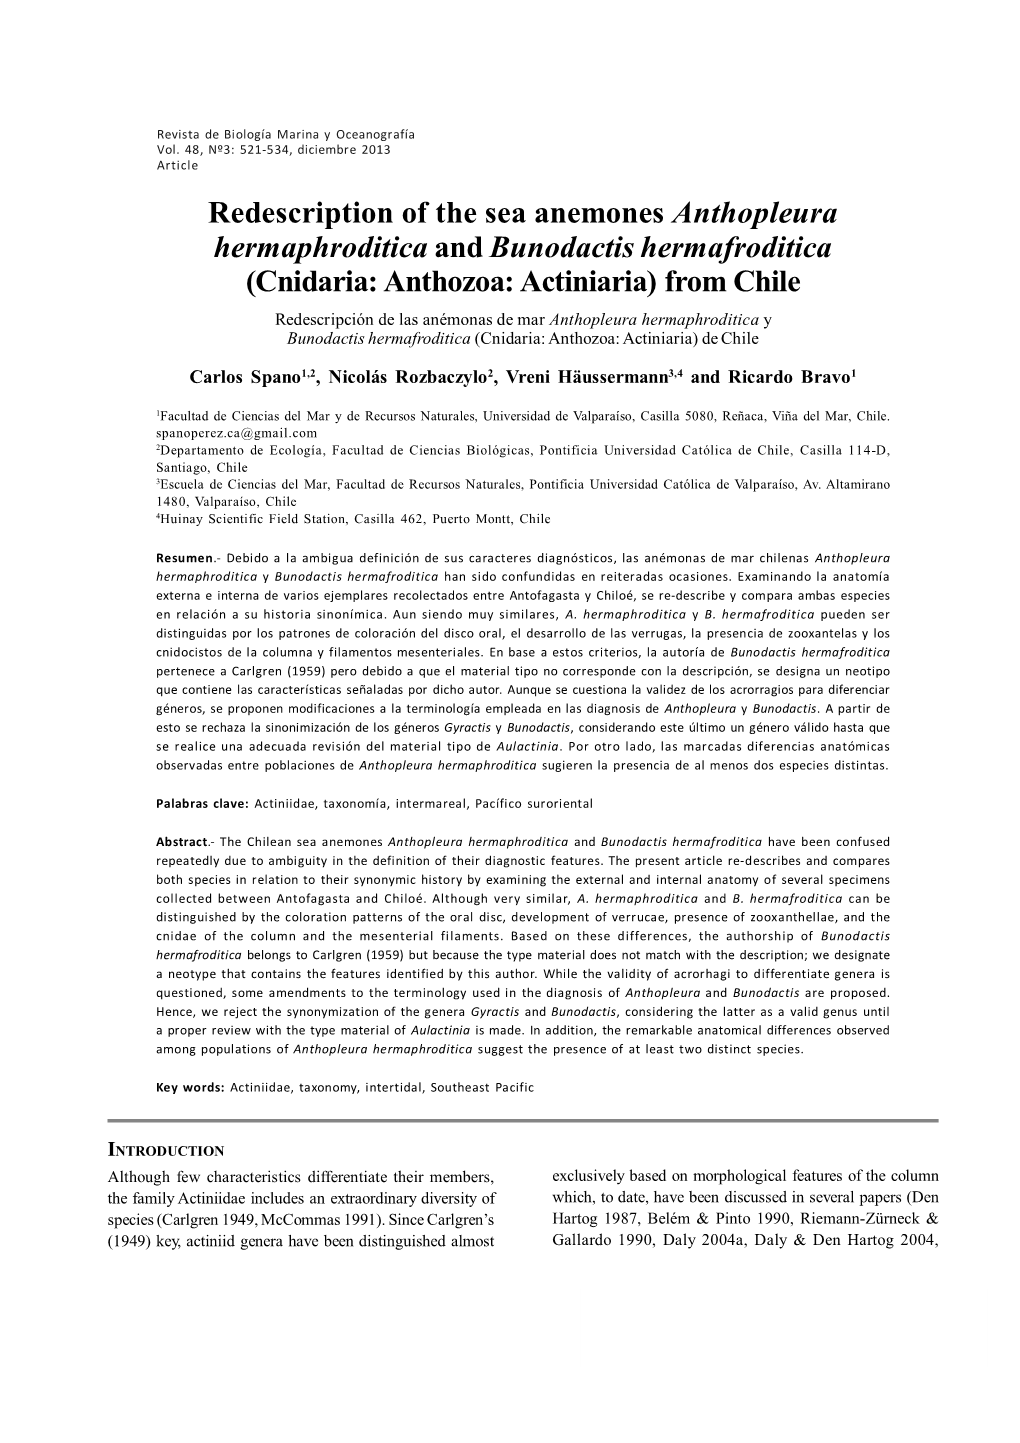 Redescription of the Sea Anemones Anthopleura Hermaphroditica and Bunodactis Hermafroditica (Cnidaria: Anthozoa: Actiniaria)